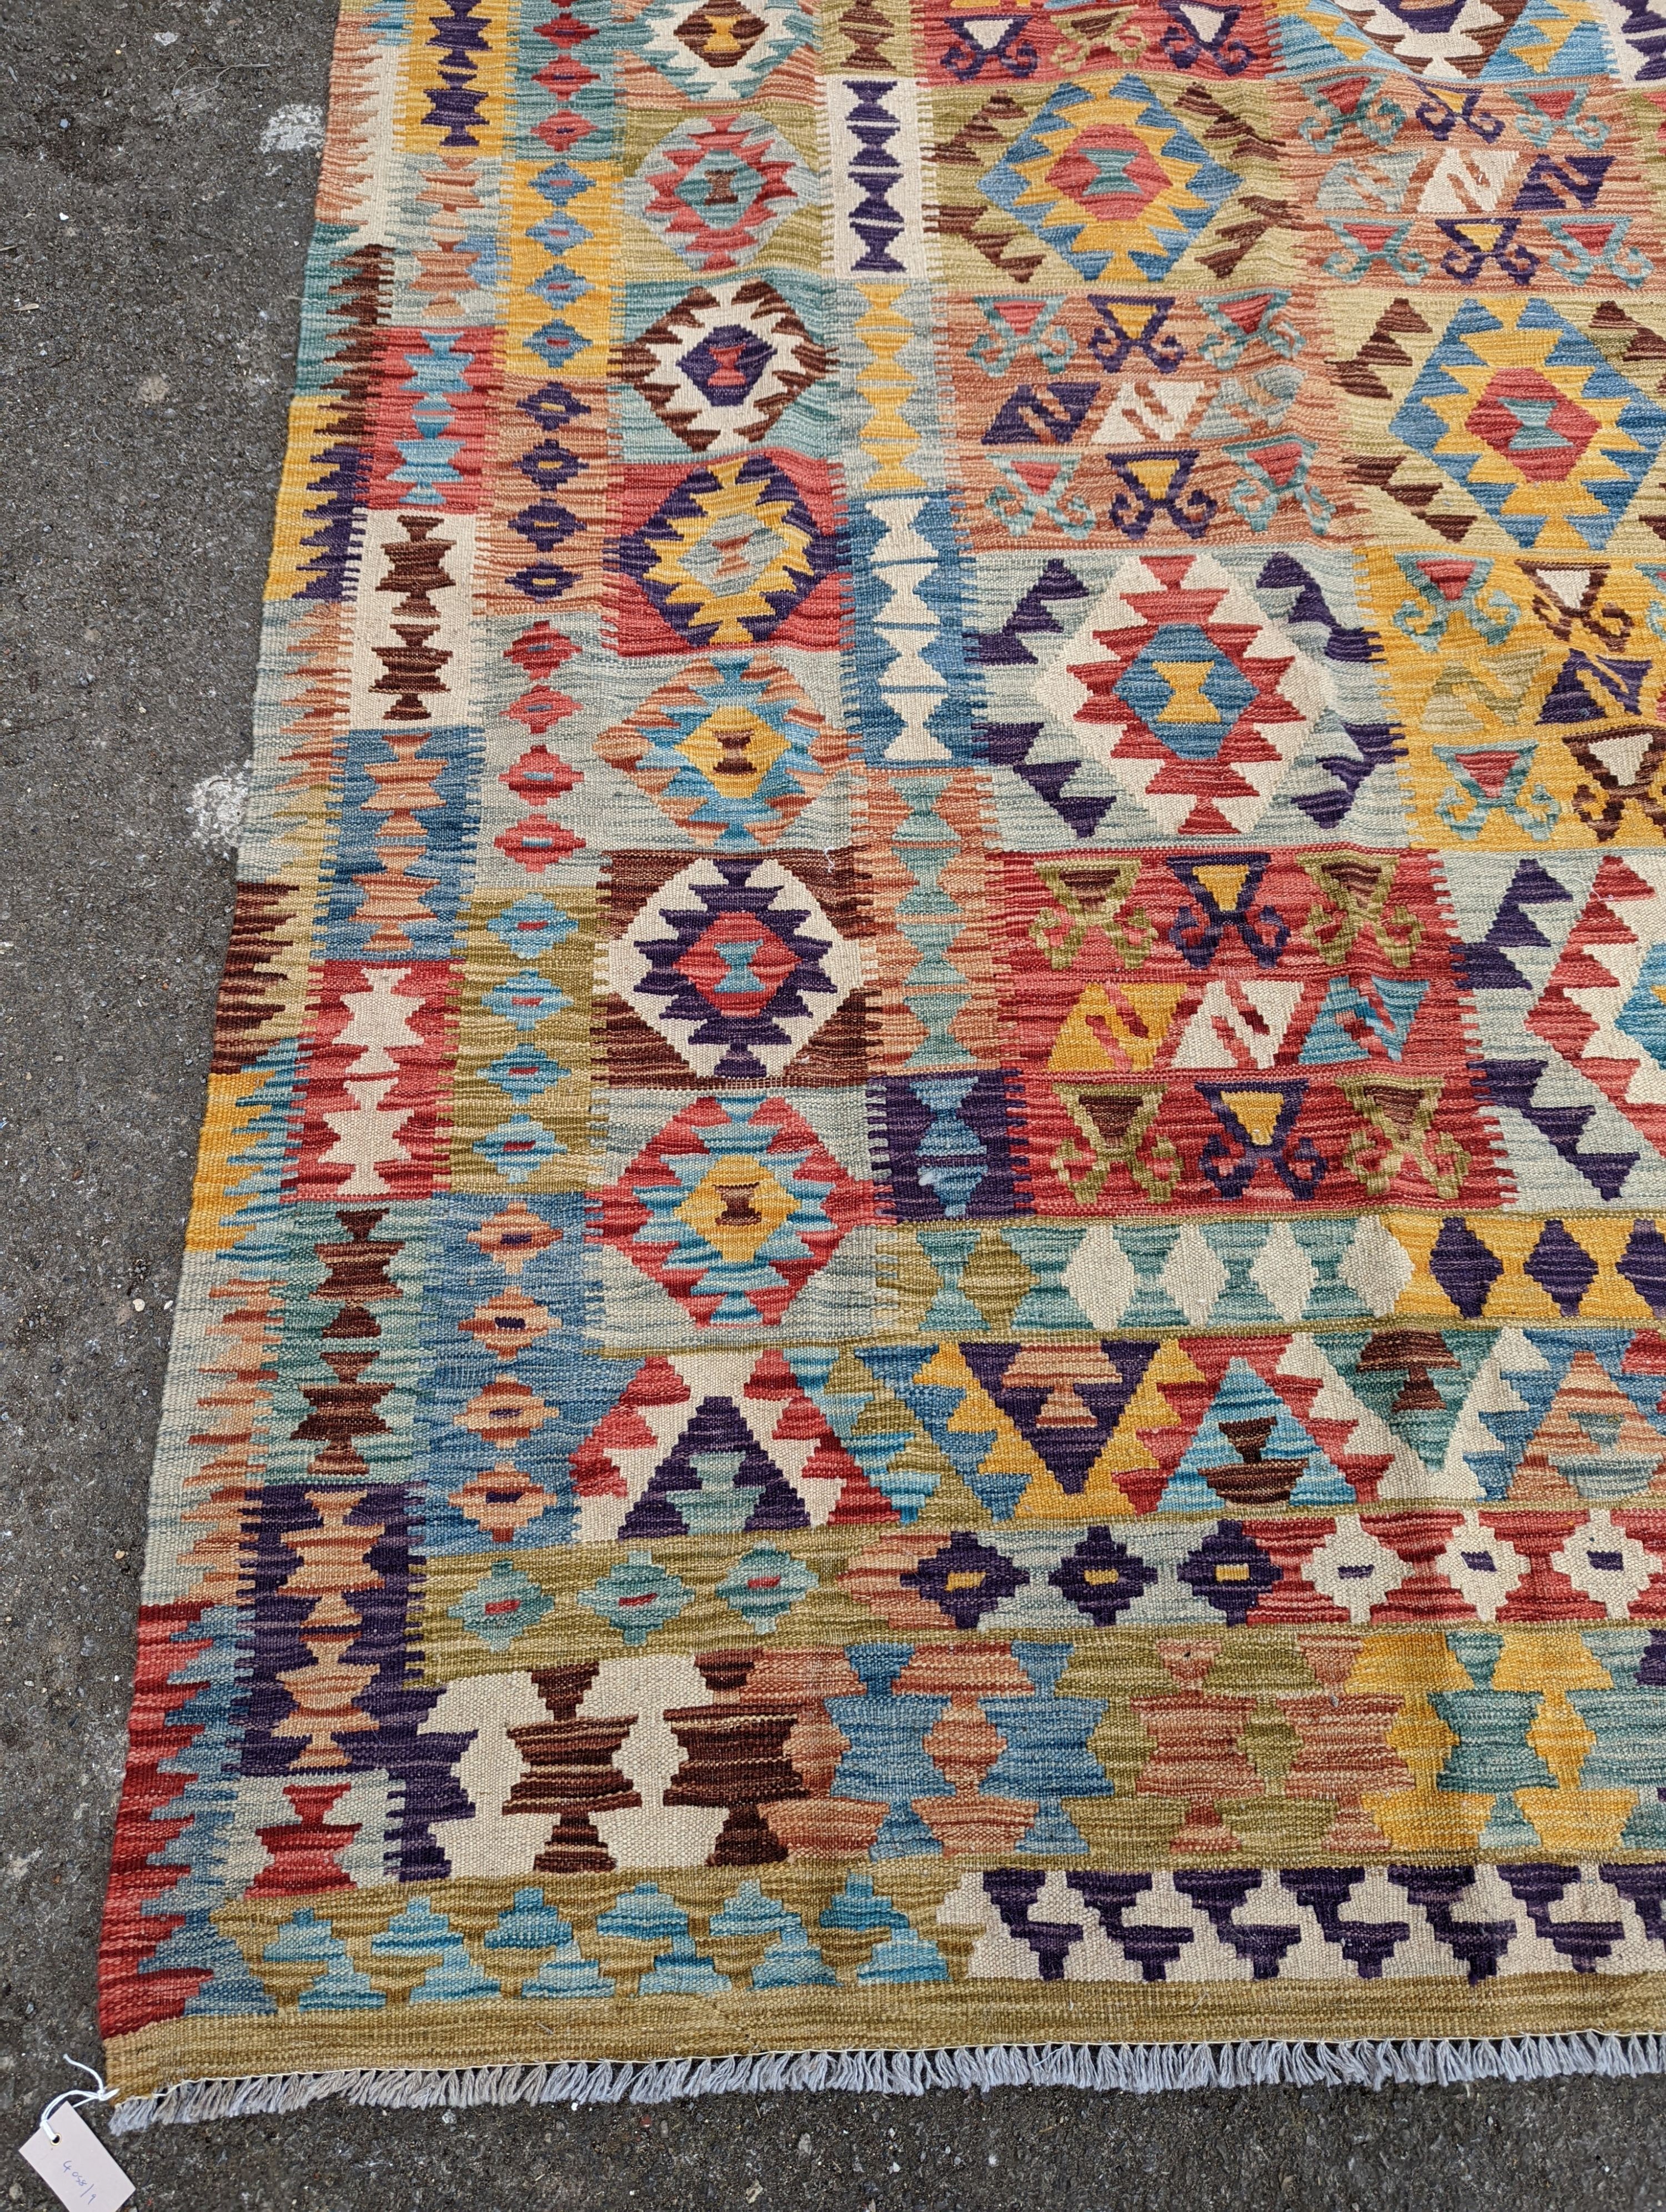 A contemporary Anatolian design Kilim flatweave carpet, approx. 300 x 200cm) - Image 2 of 5